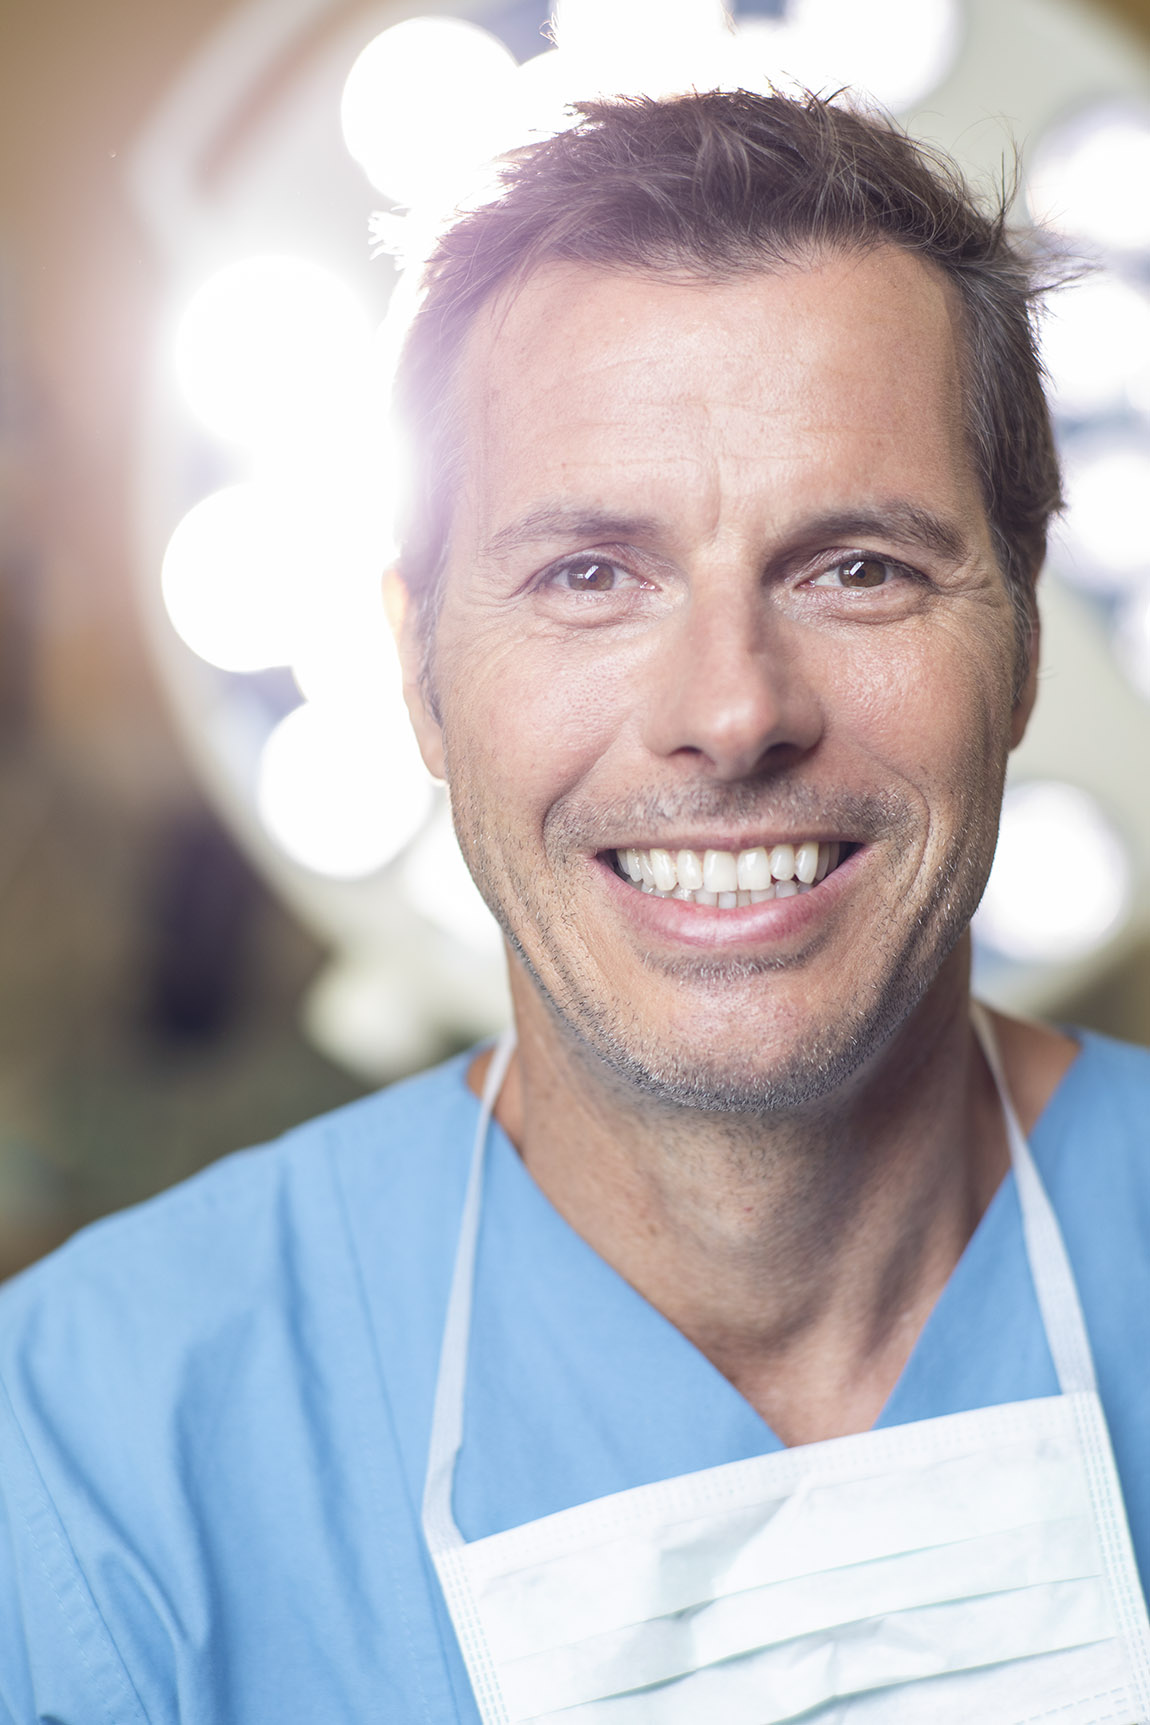 Dr. Christian Schrank: Responsible surgical art